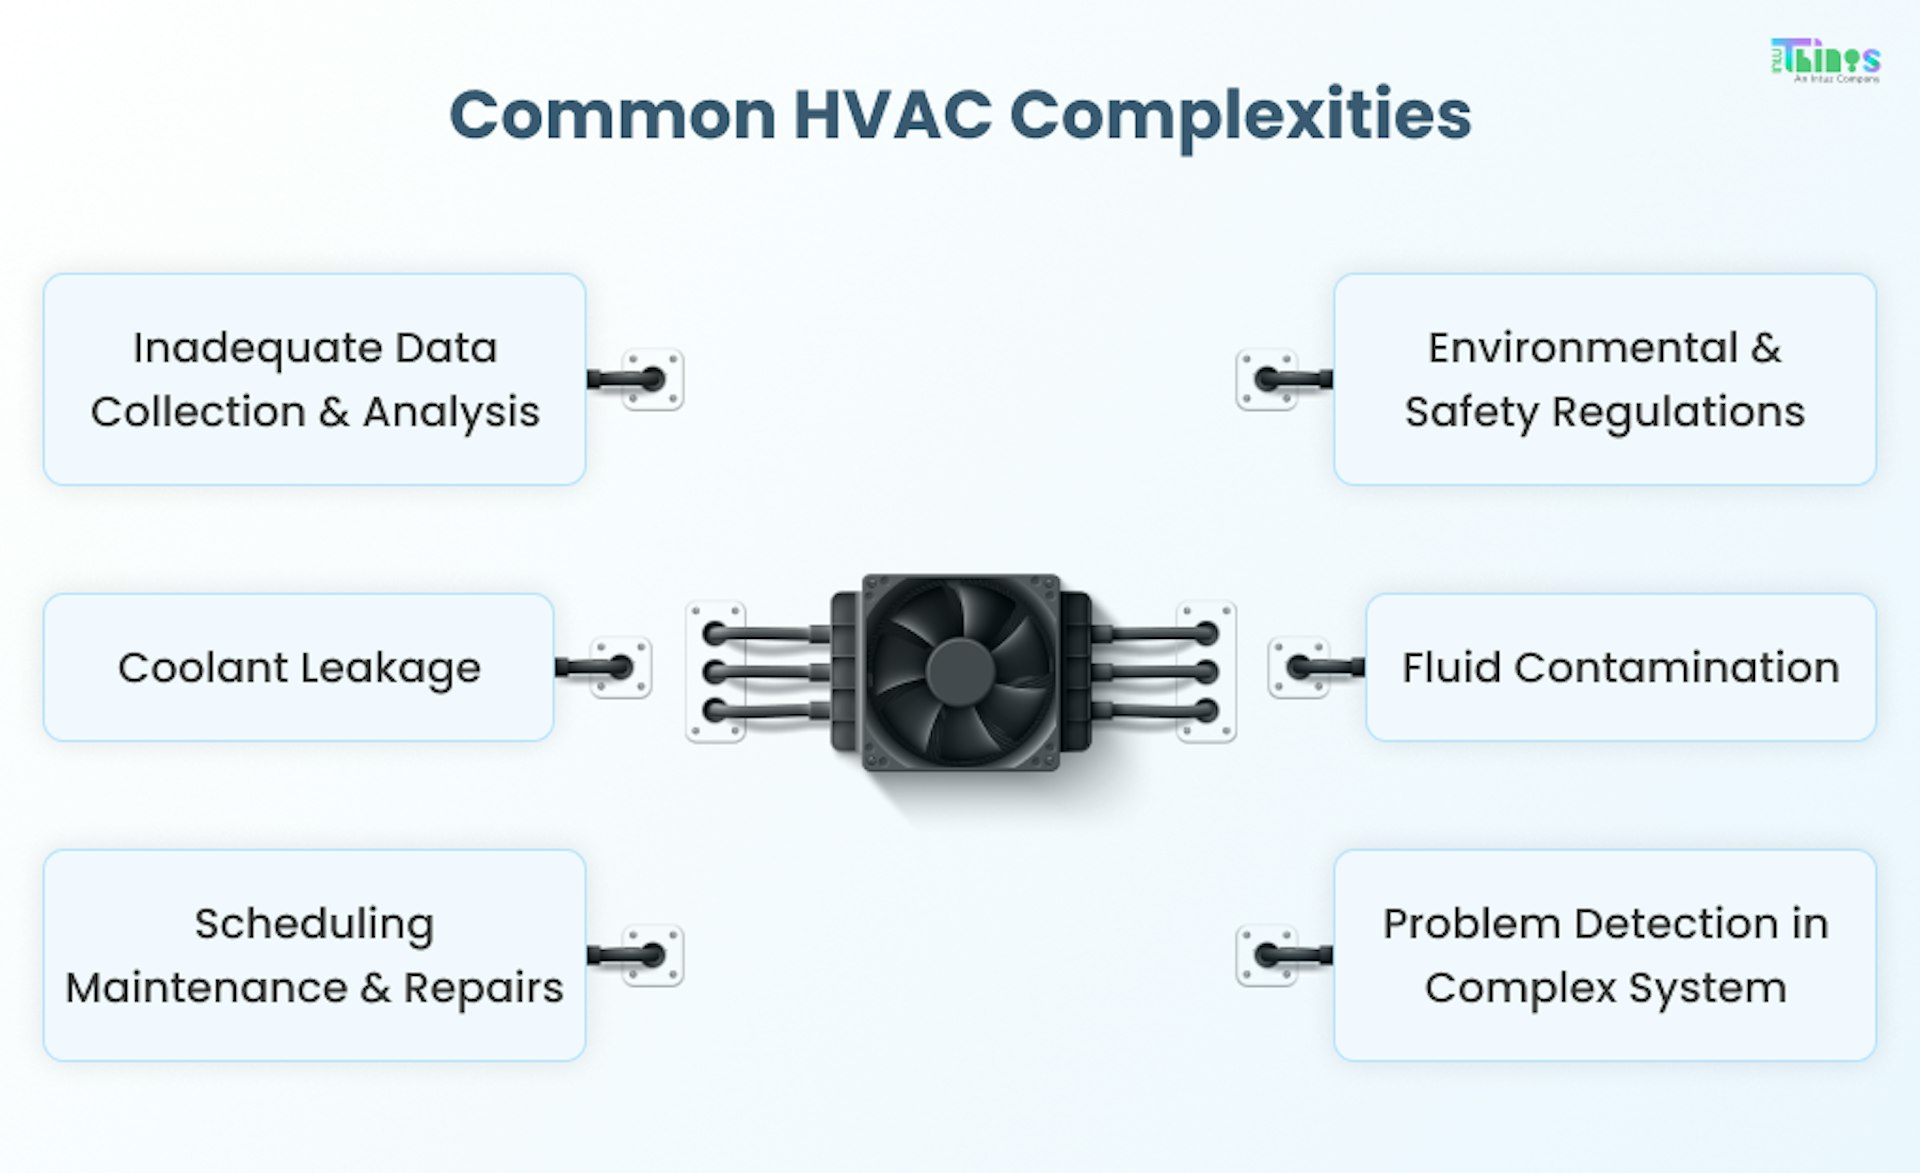 HVAC Complexities